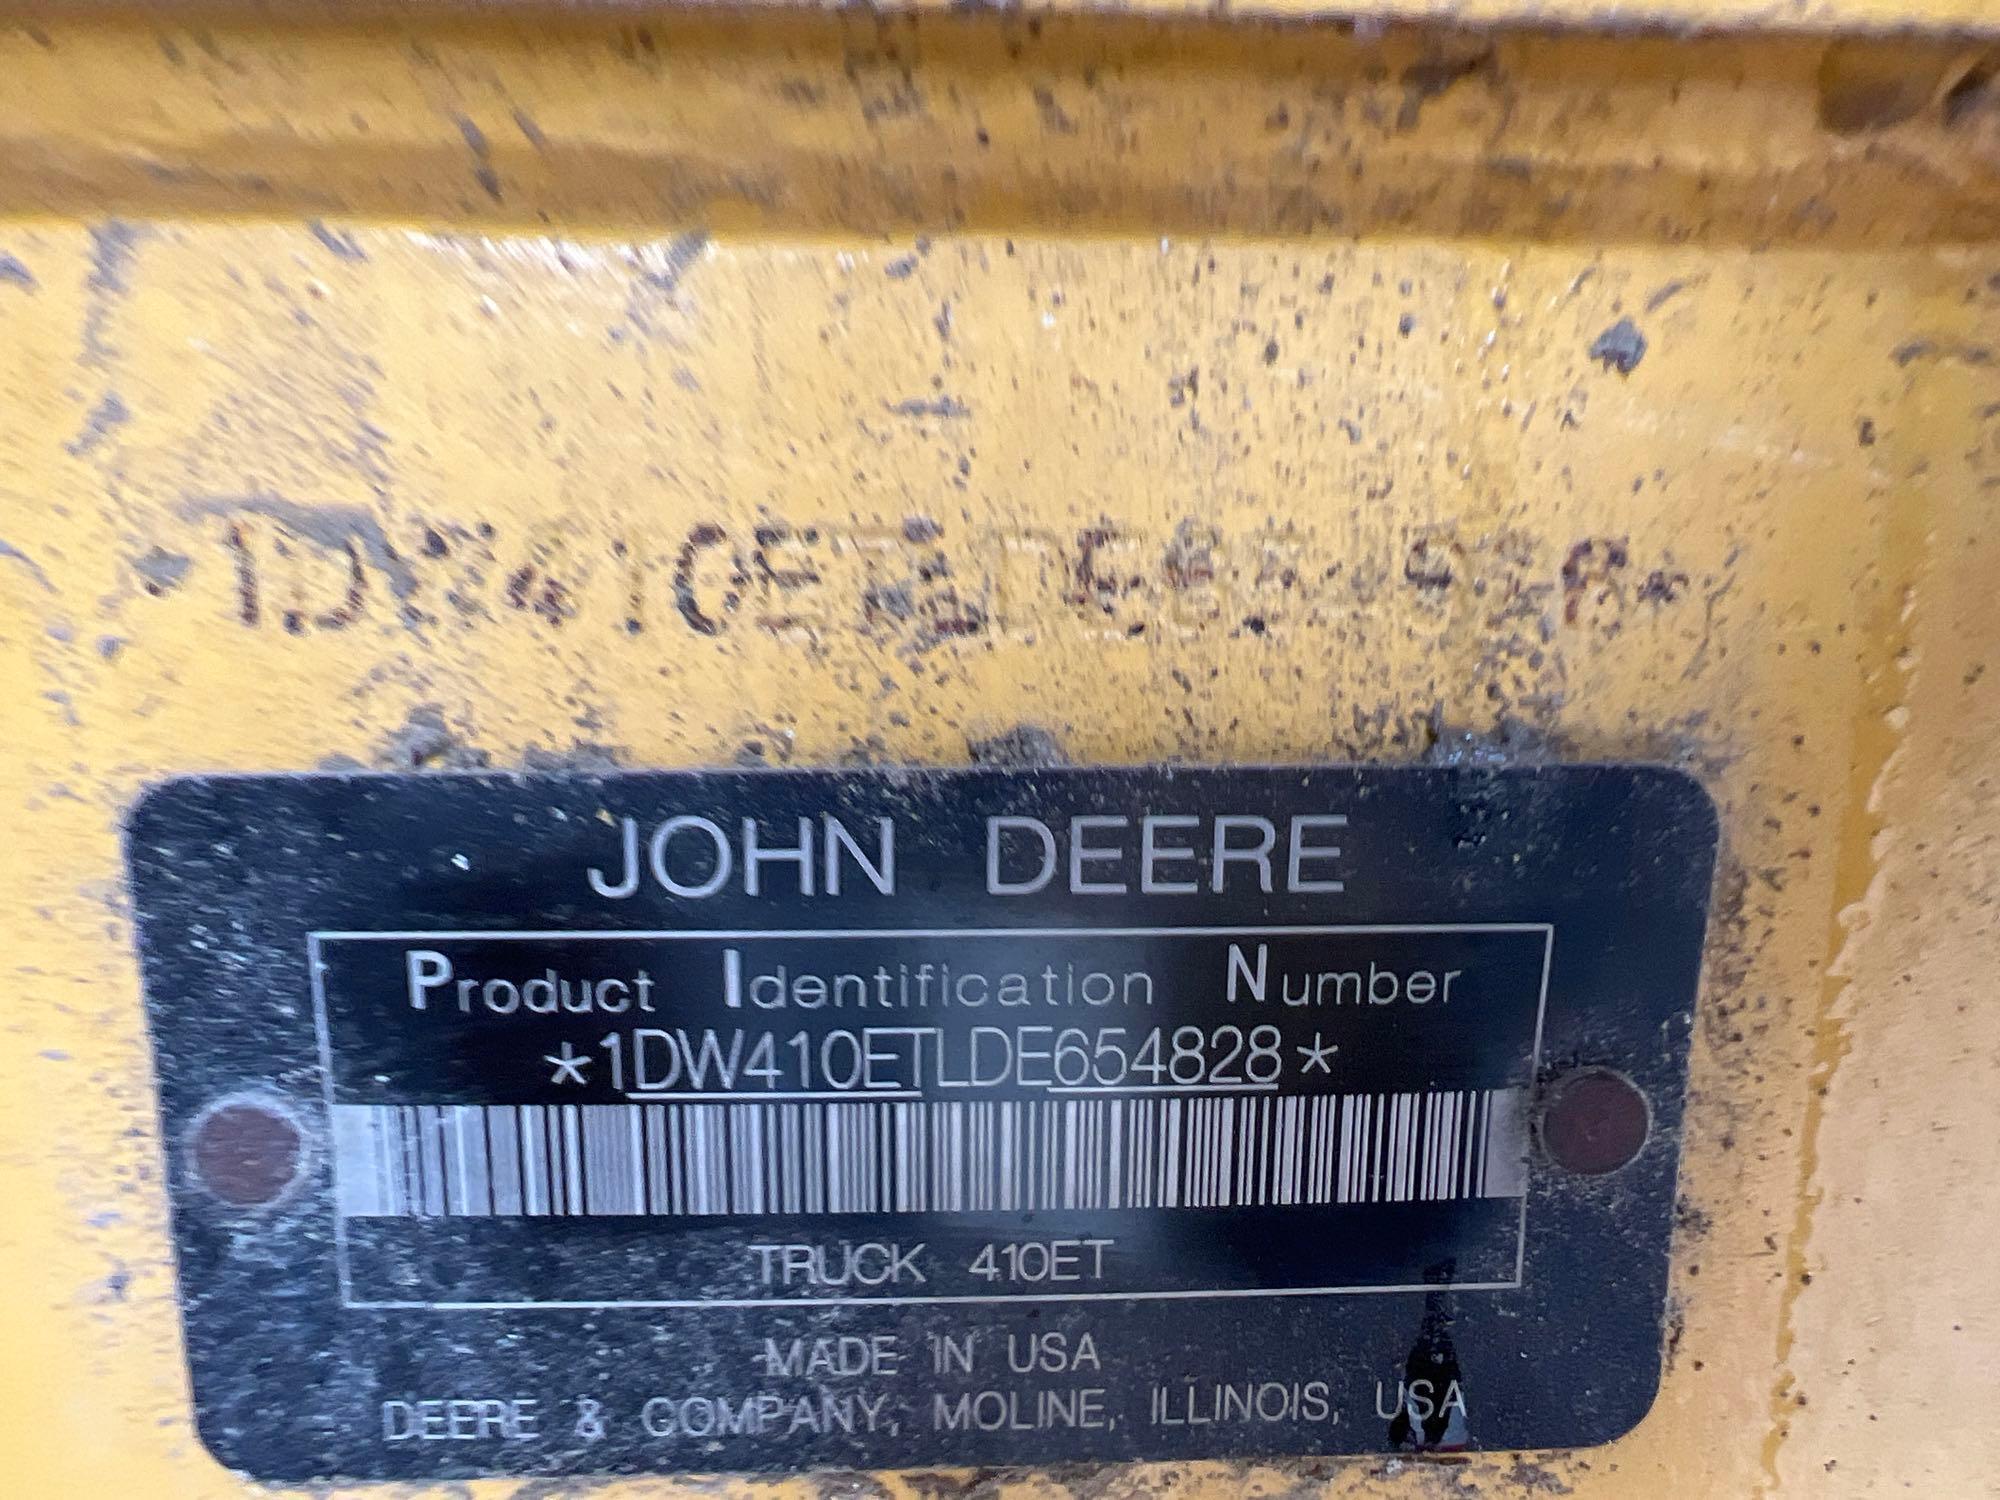 2013 JOHN DEERE 410E ARTICULATED HAUL TRUCK SN:1DW410ETLDE654828 6x6, powered by John Deere diesel